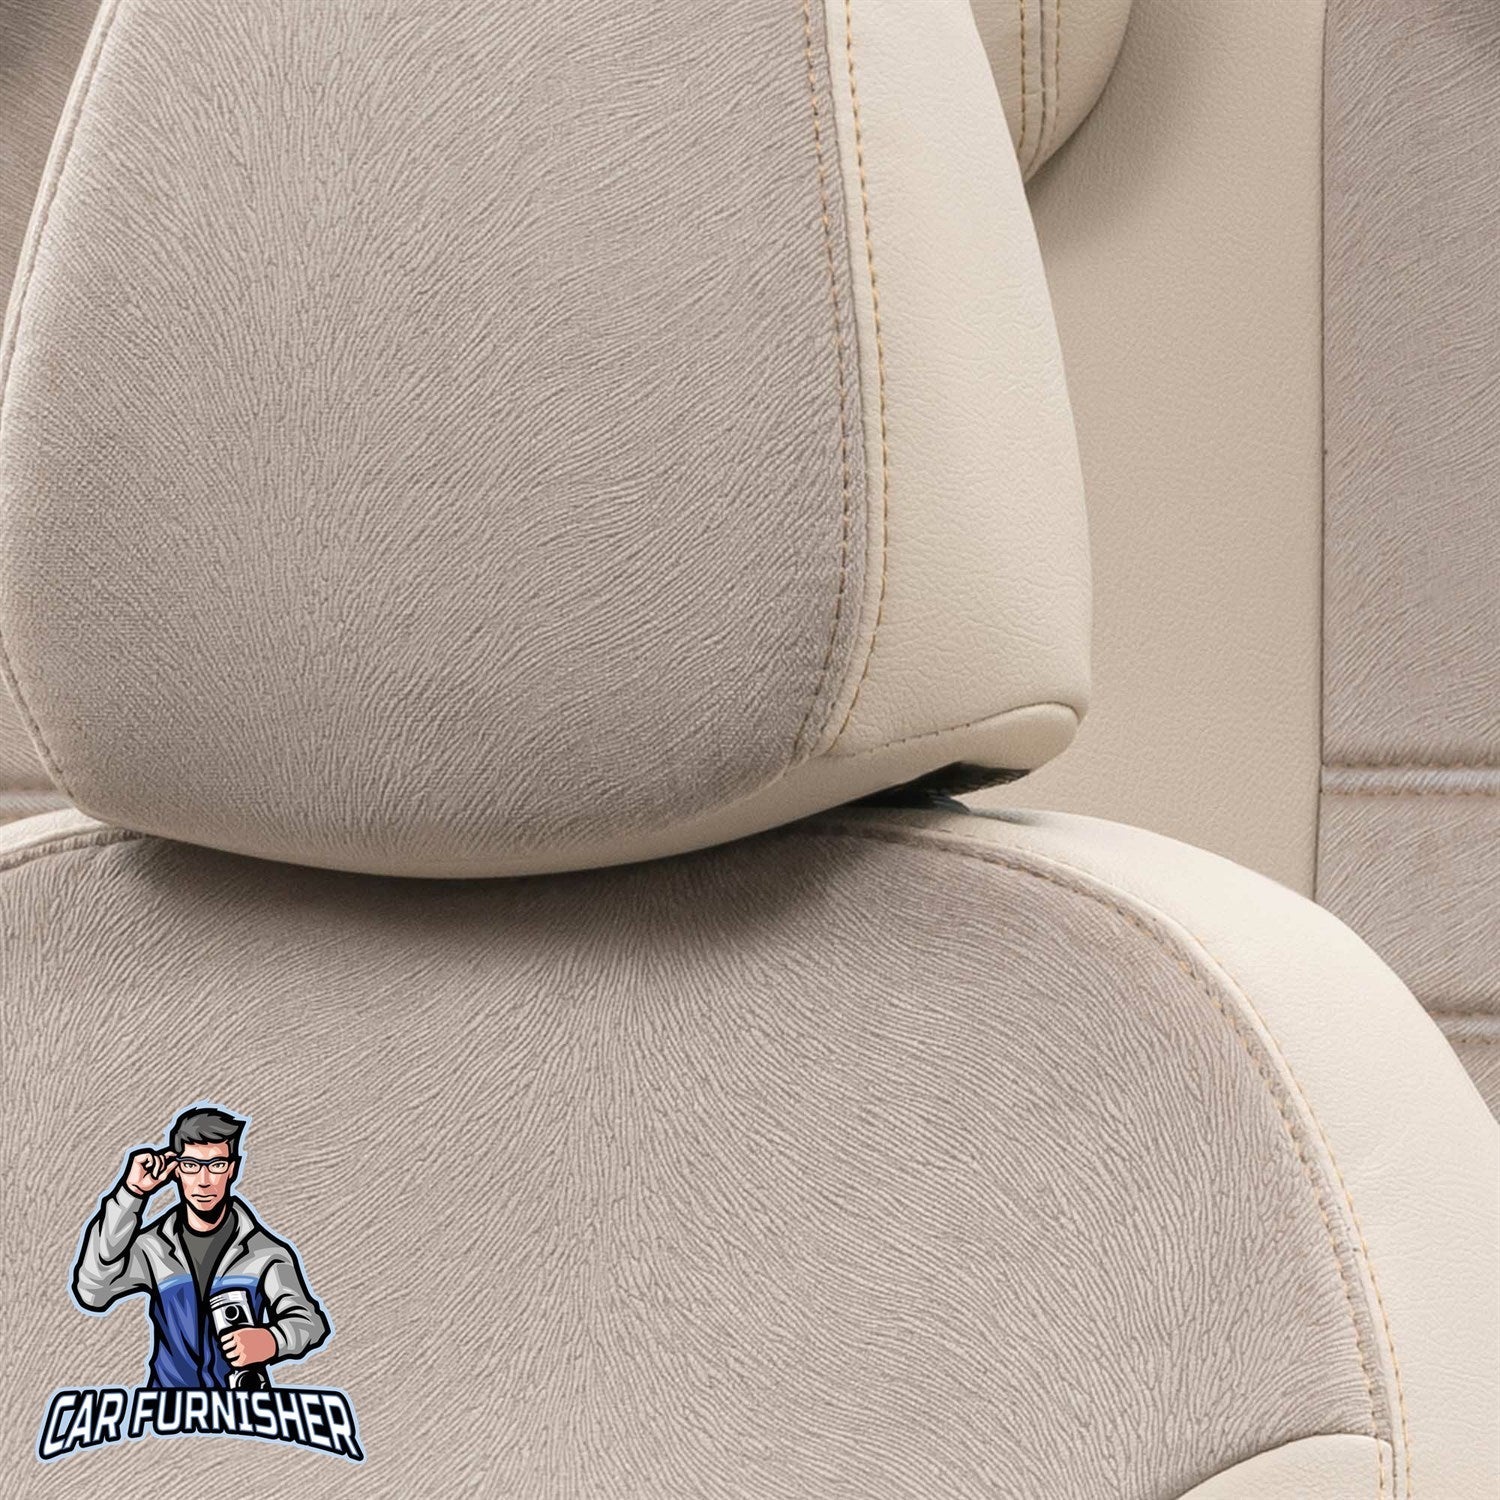 Citroen Nemo Car Seat Covers 2008-2016 London Design Beige Full Set (5 Seats + Handrest) Leather & Fabric